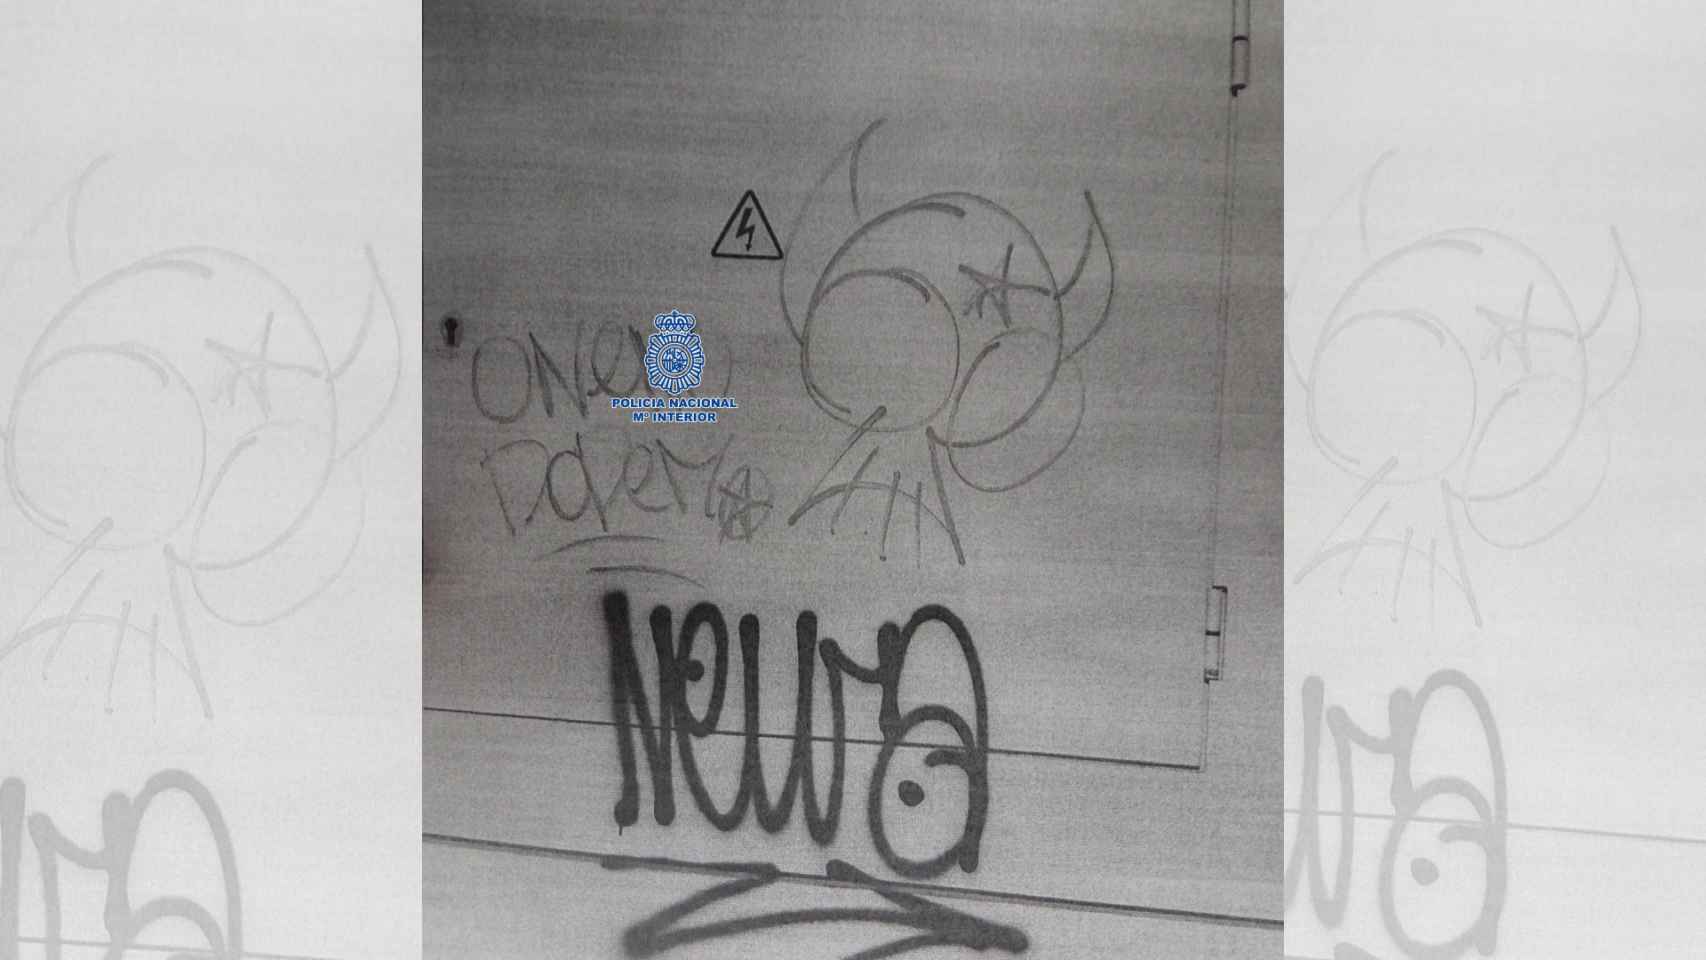 Pintada en Pontevedra atribuida al grafitero conocido como ‘o neno do demo’.